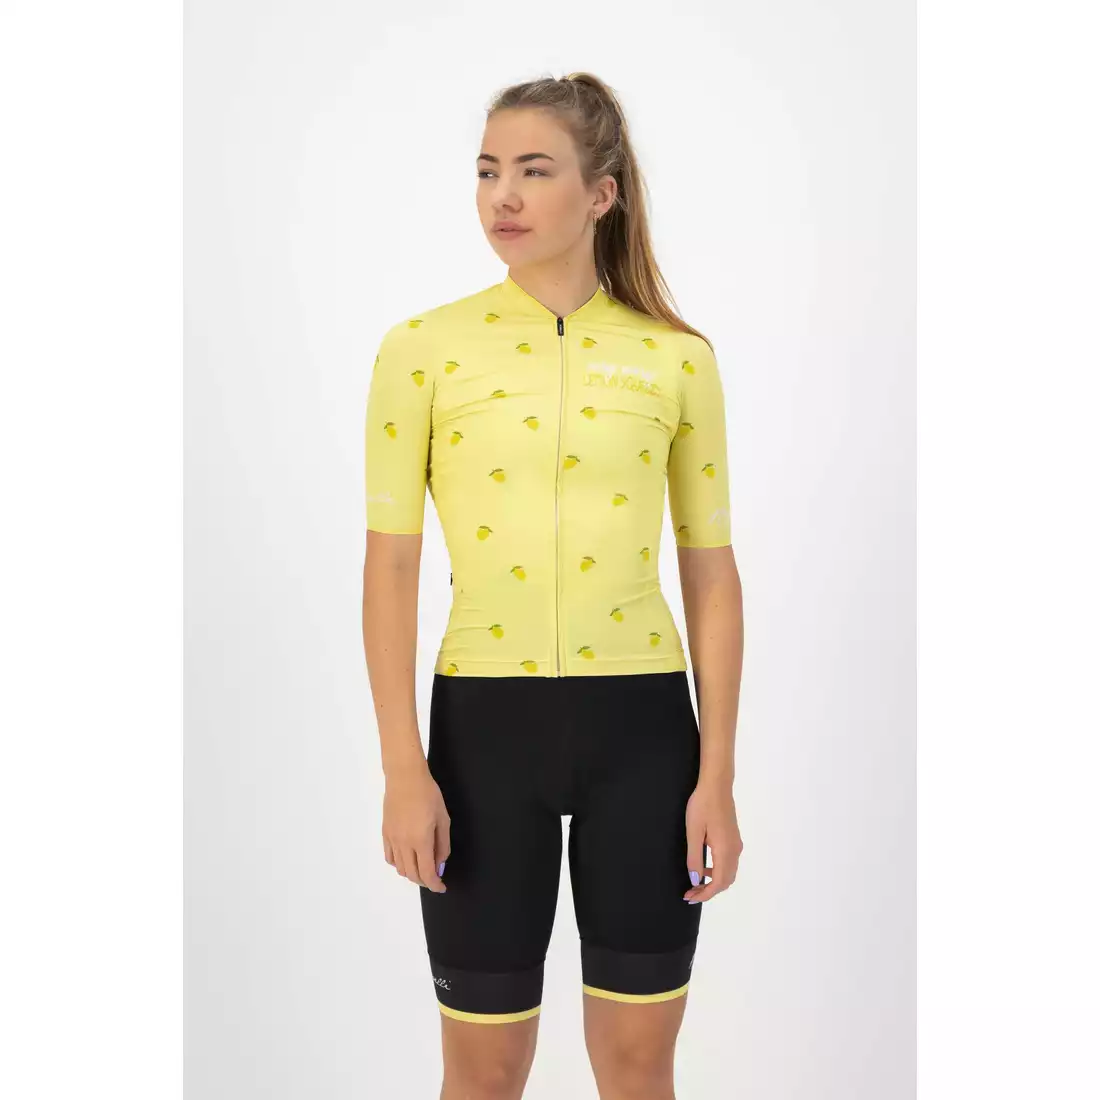 ROGELLI FRUITY Women's cycling jersey, yellow